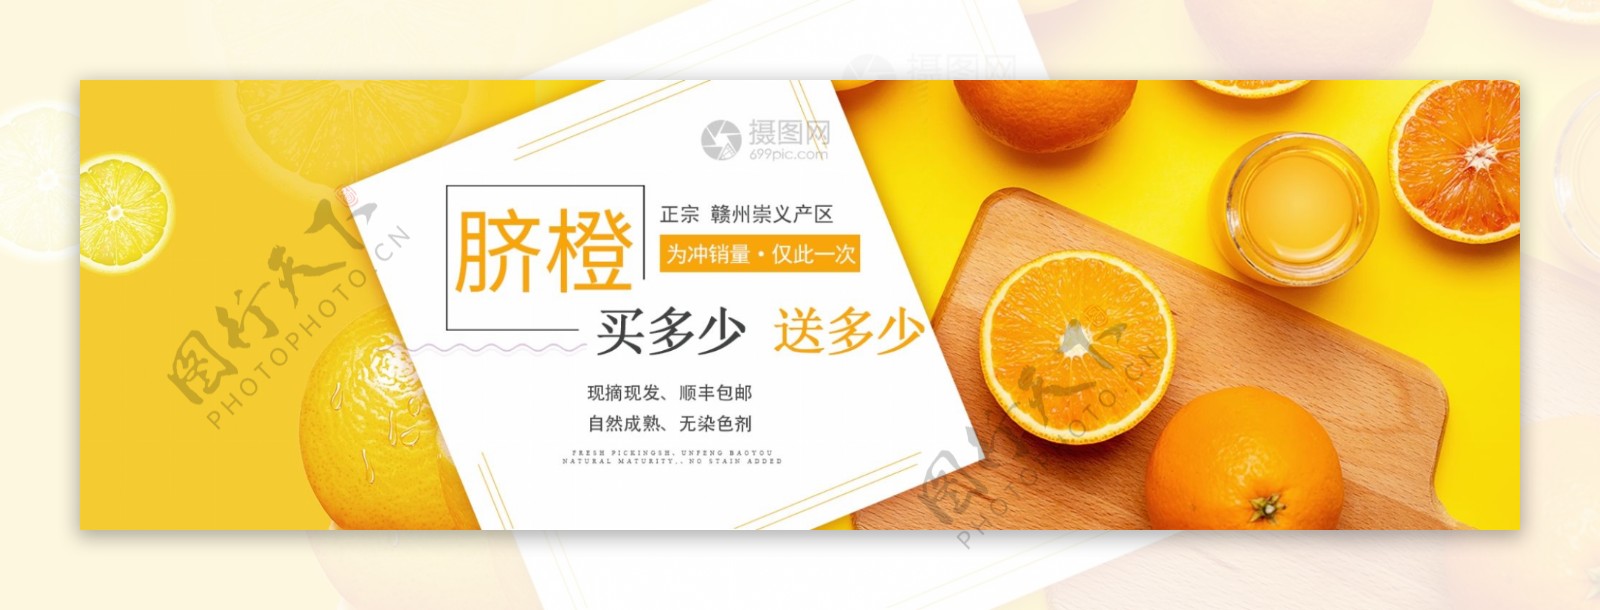 脐橙橙子促销淘宝banner